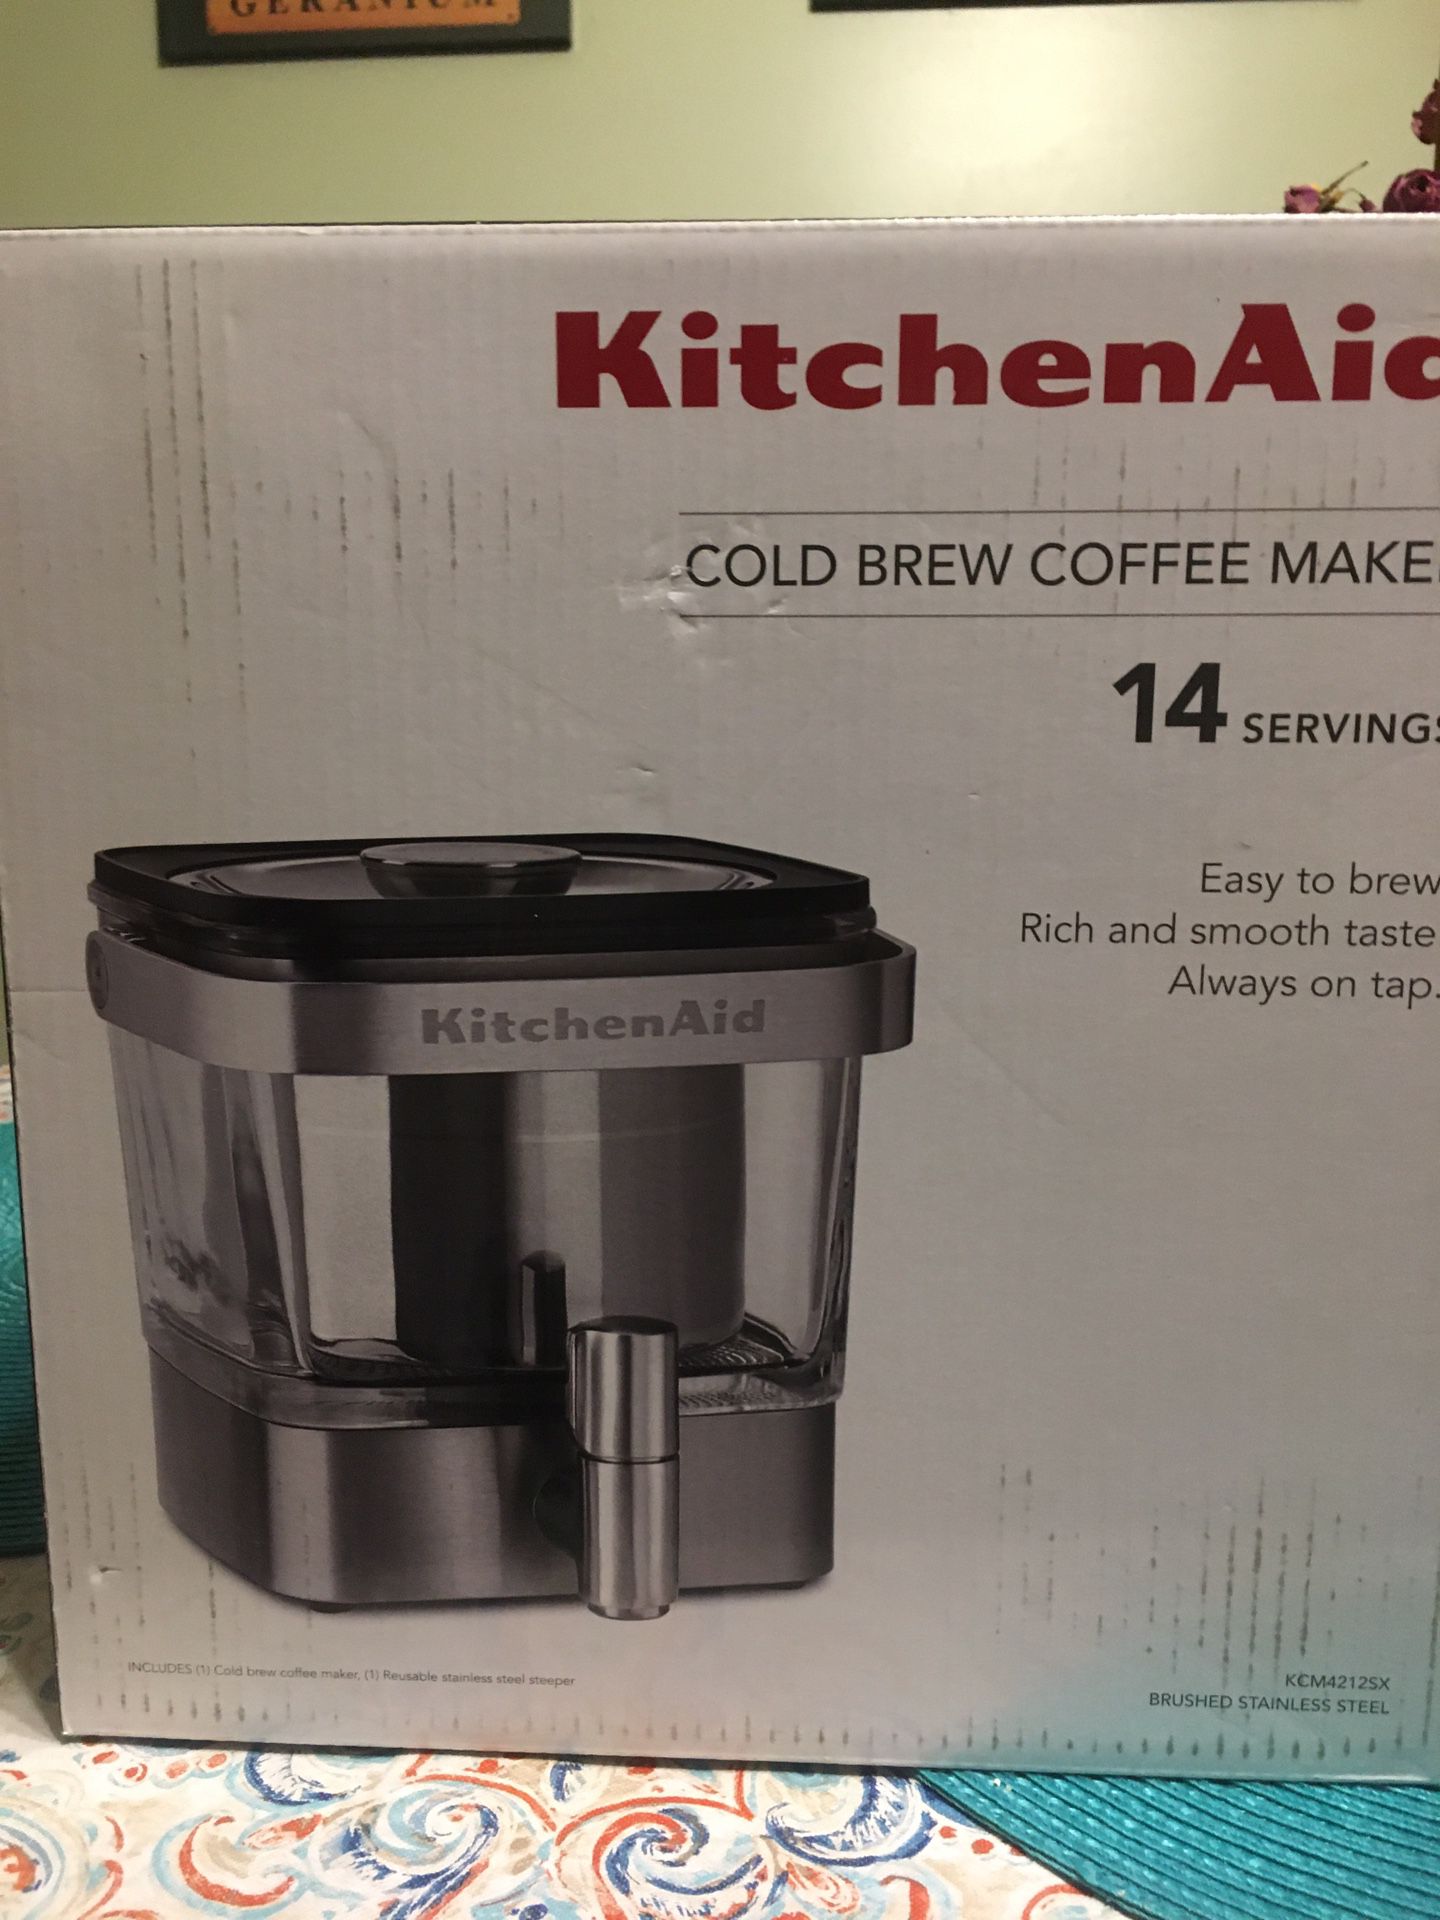 KitchenAid cold brew coffee maker